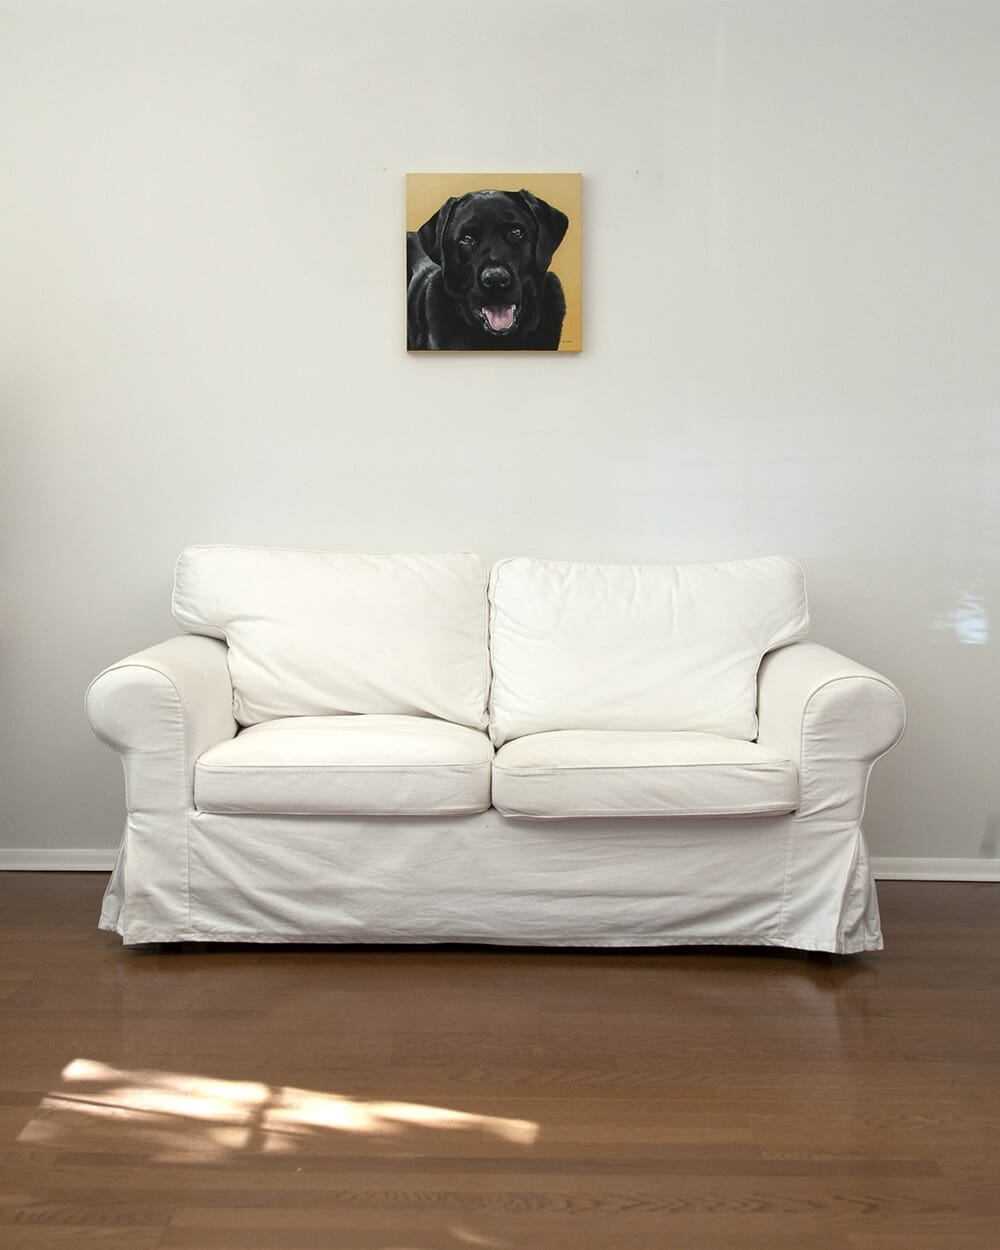 A custom dog portrait of a black labrador dog by fine arts painter Erica Eriksdotter hangs over a white loveseat